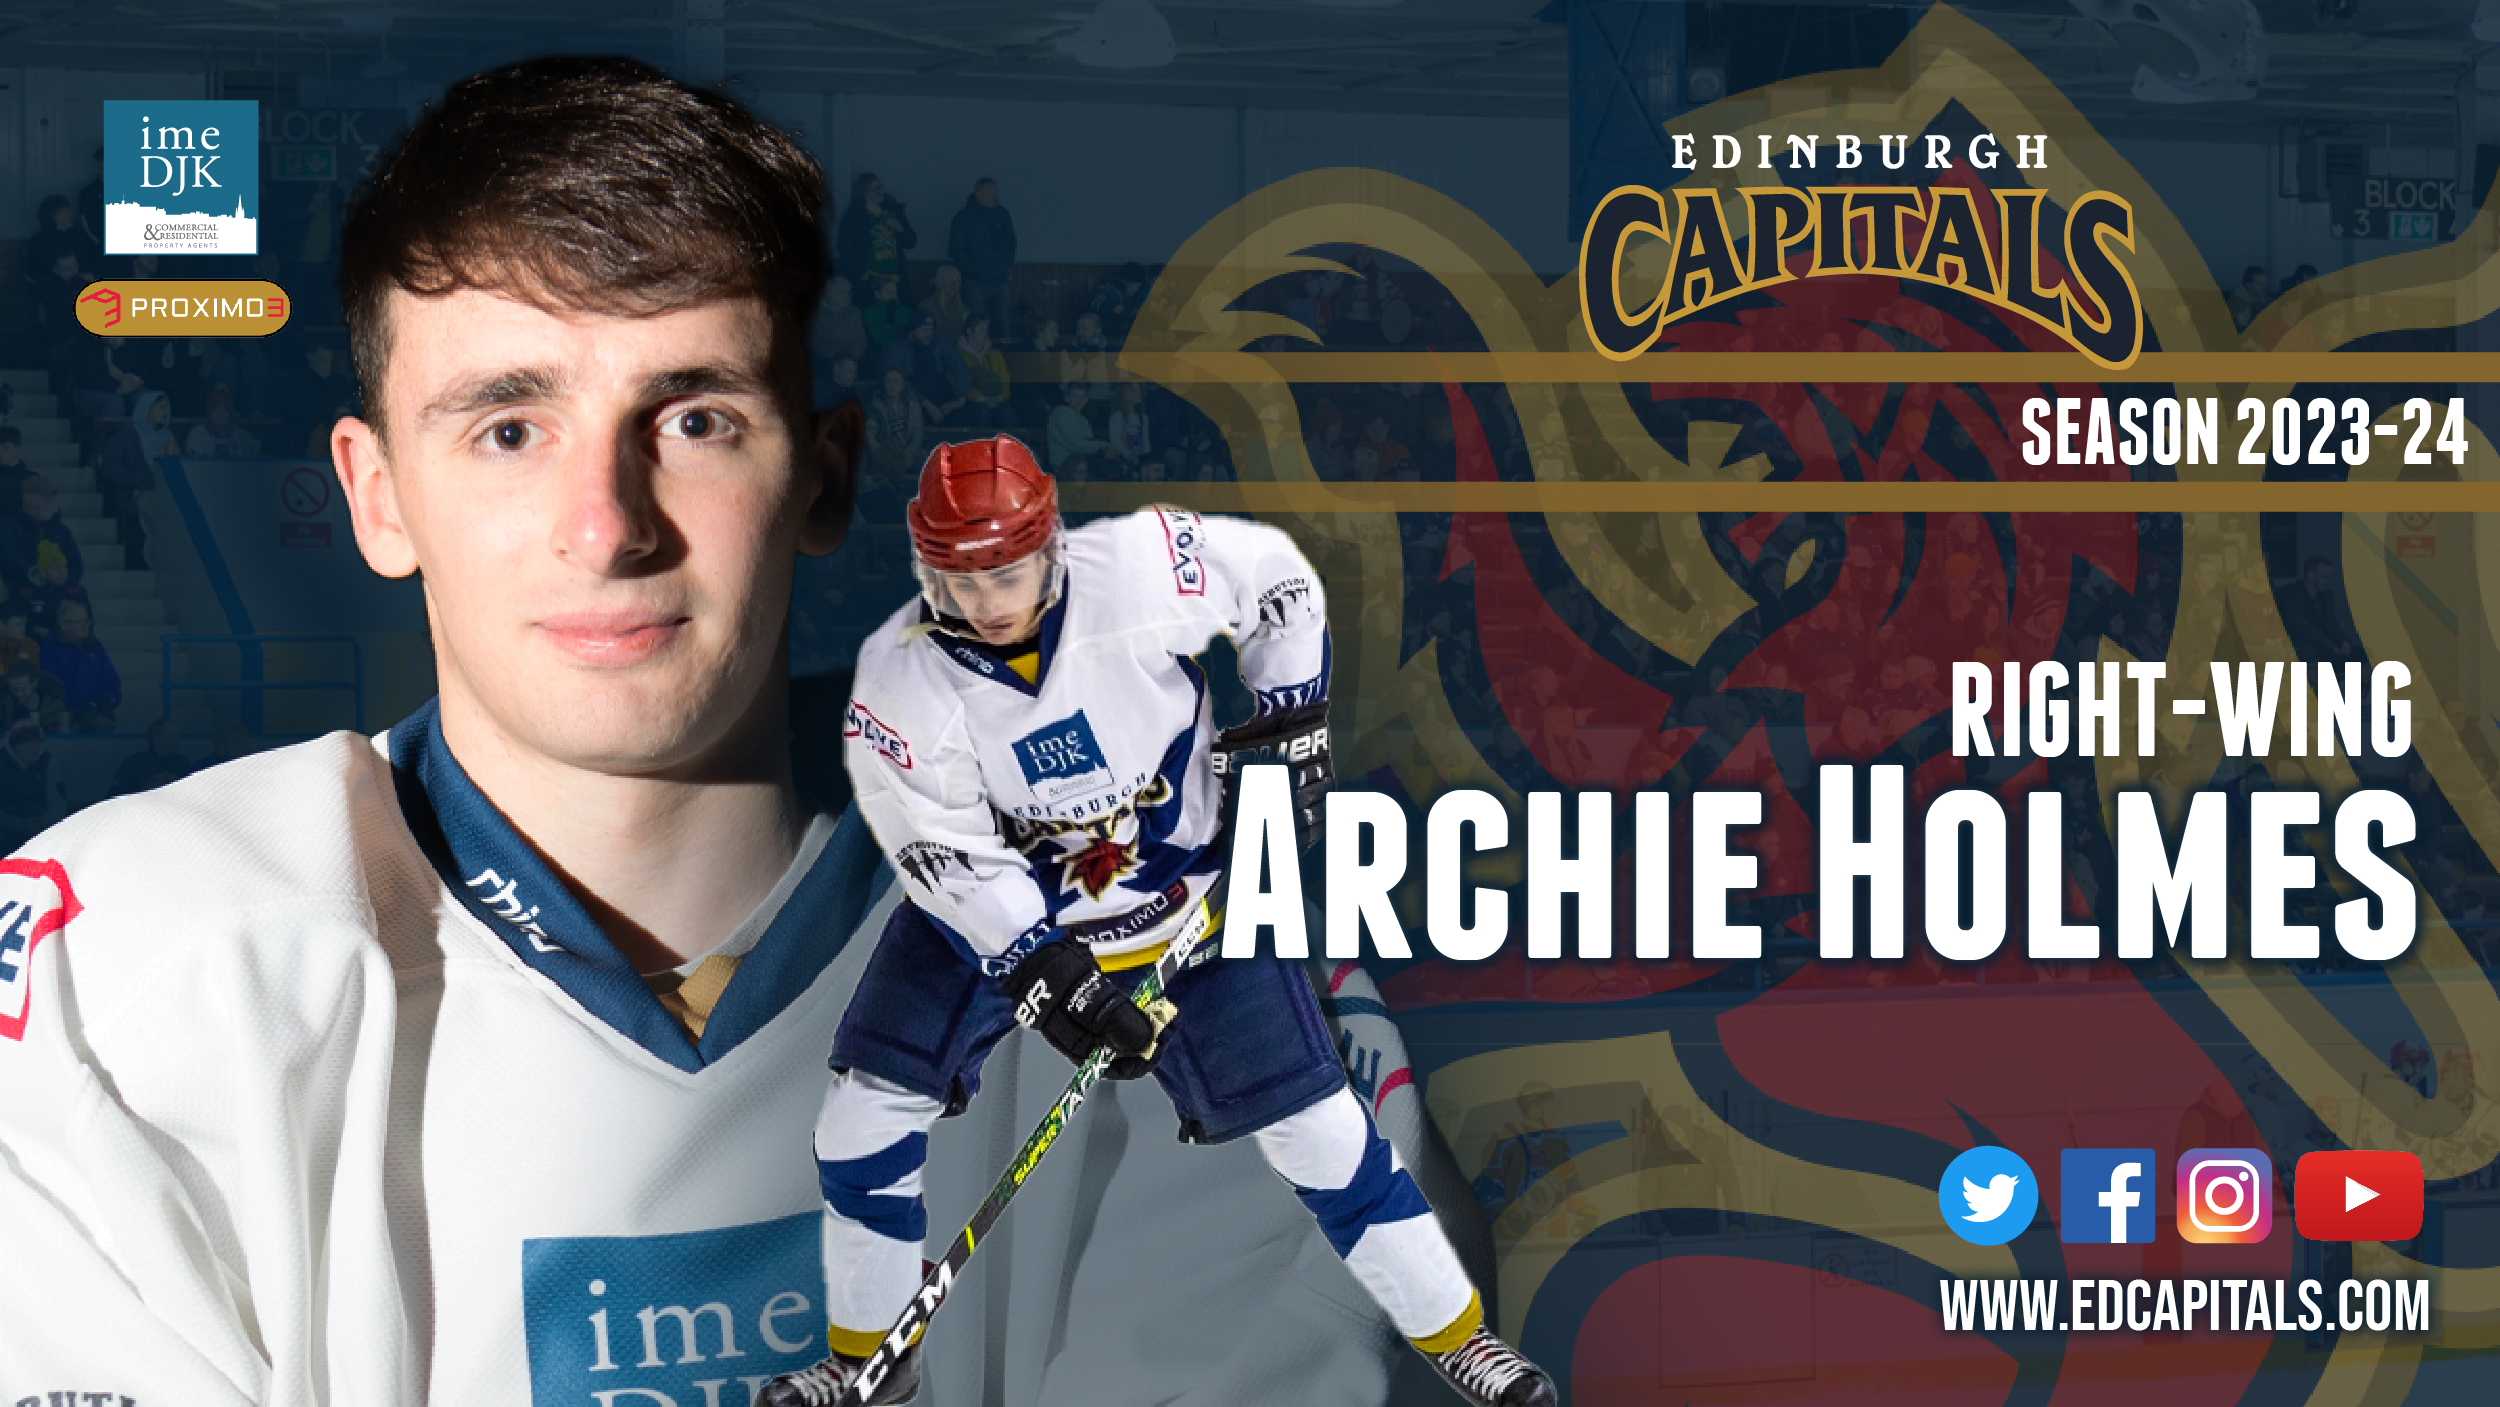 Archie Is Back Holmes – Edinburgh Capitals